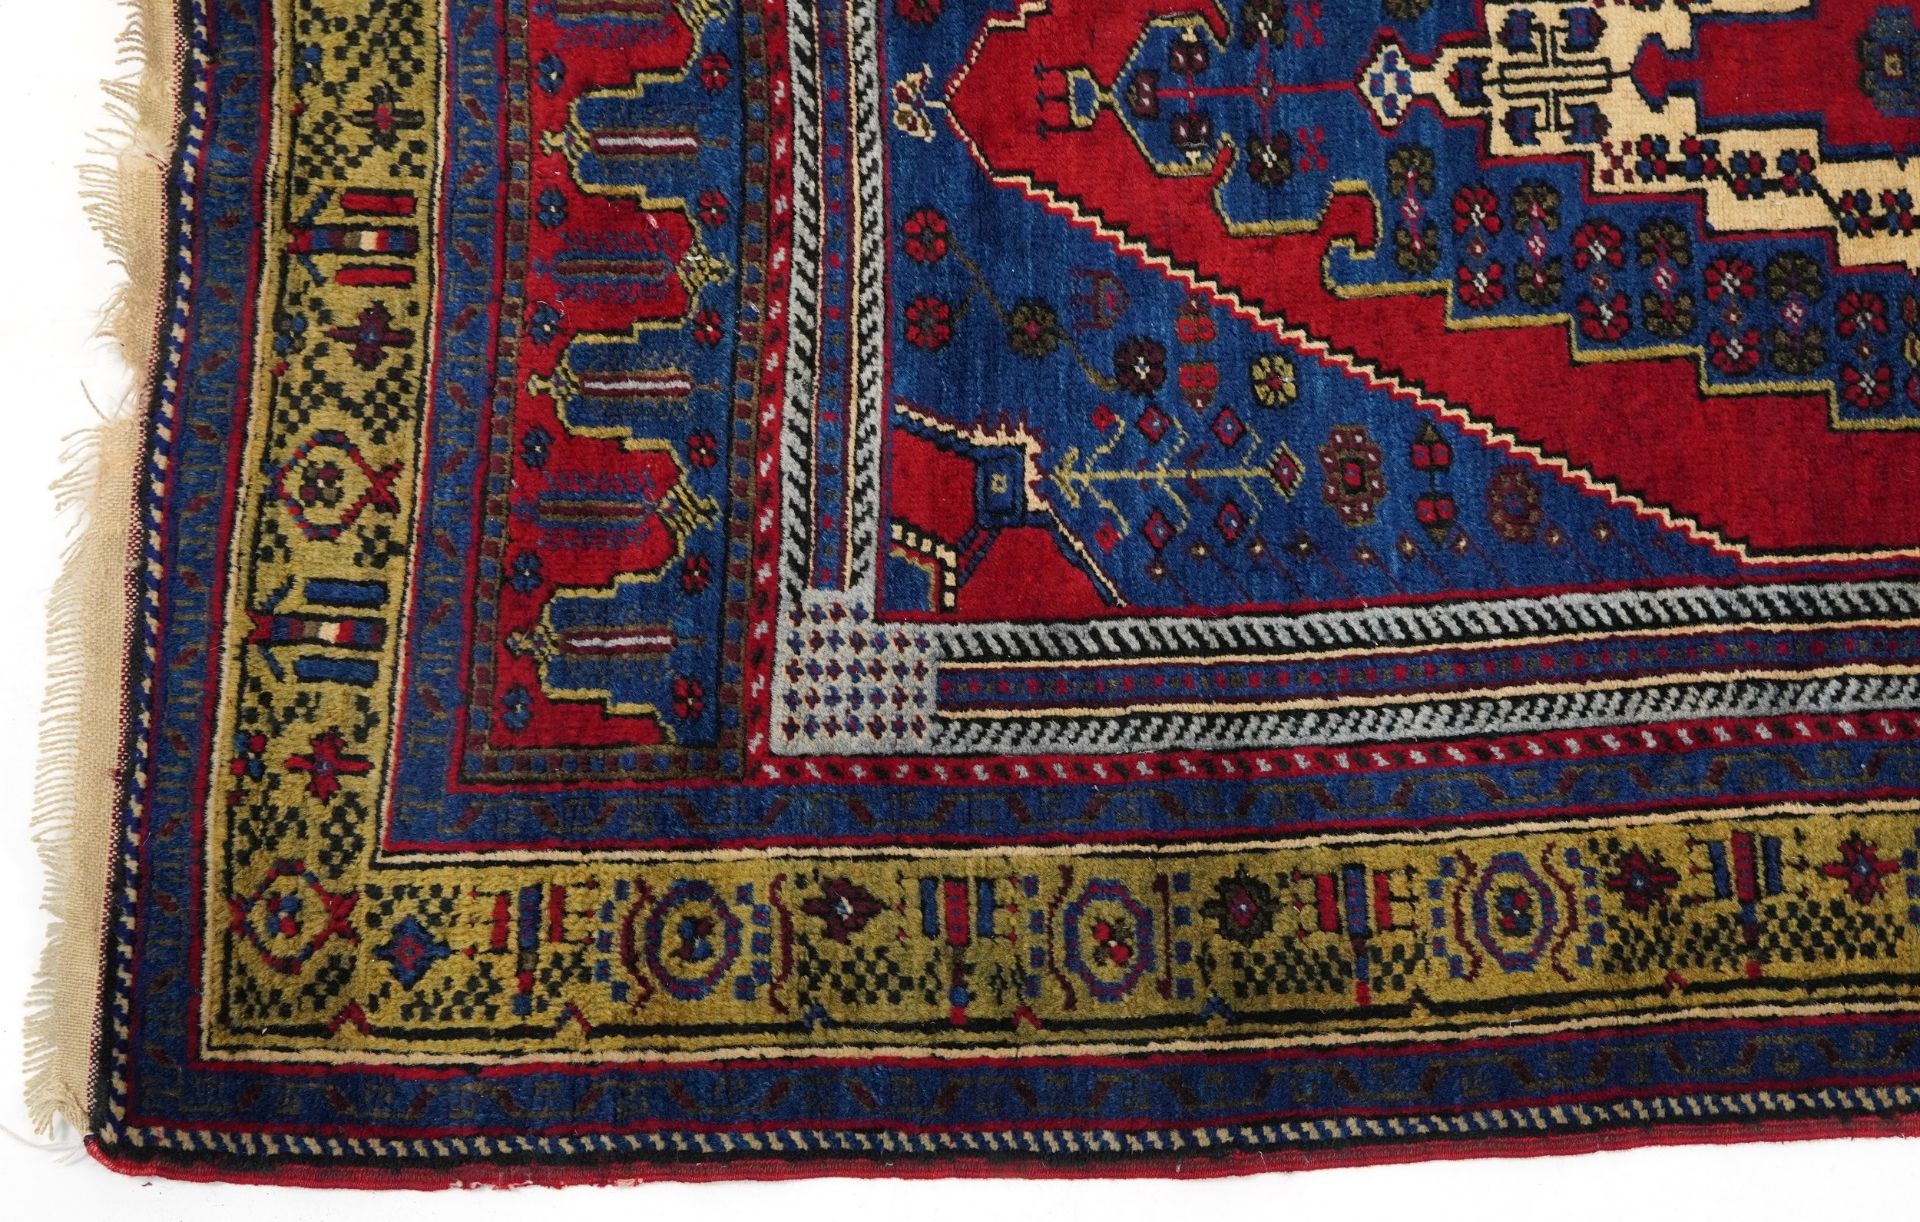 Rectangular Turkish rug, with all over geometric design, 200cm x 120cm - Image 4 of 6